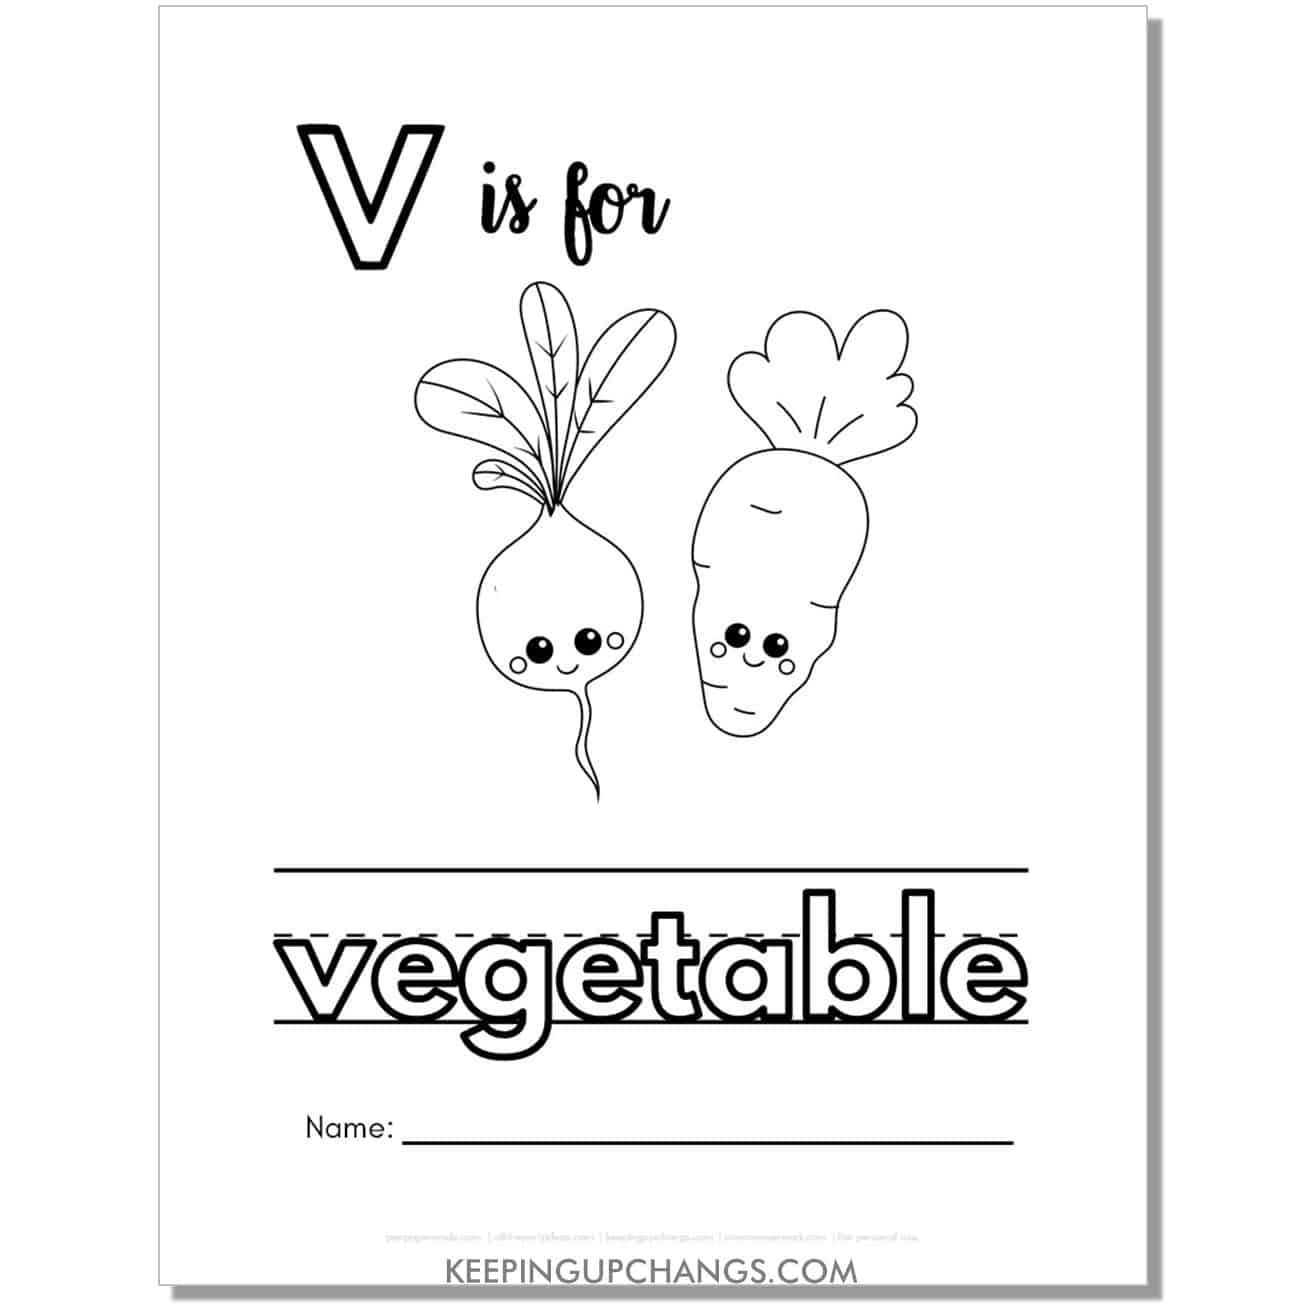 cute letter v coloring page worksheet with vegetables.